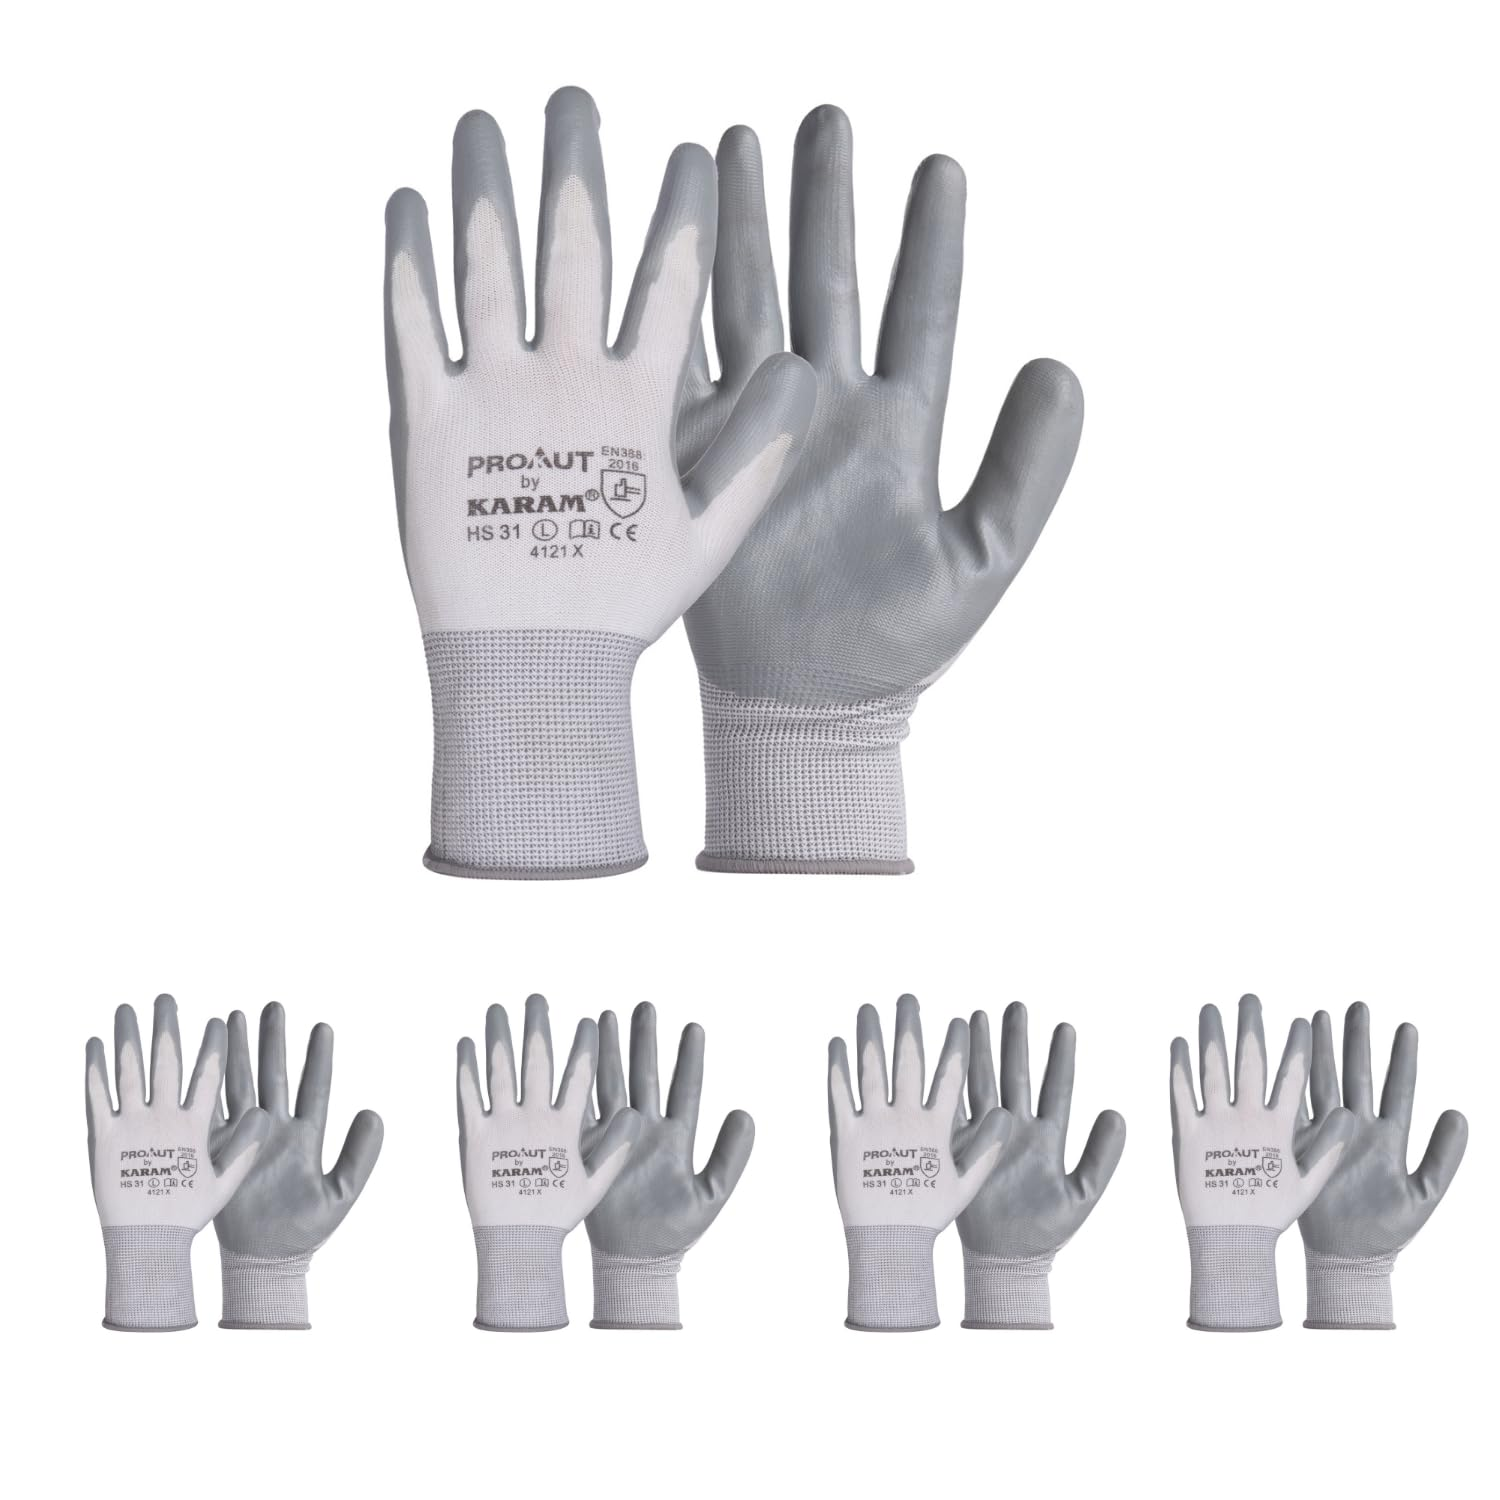 /storage/photos/1/karam new product/Karam Safety gloves HS 31 4.png